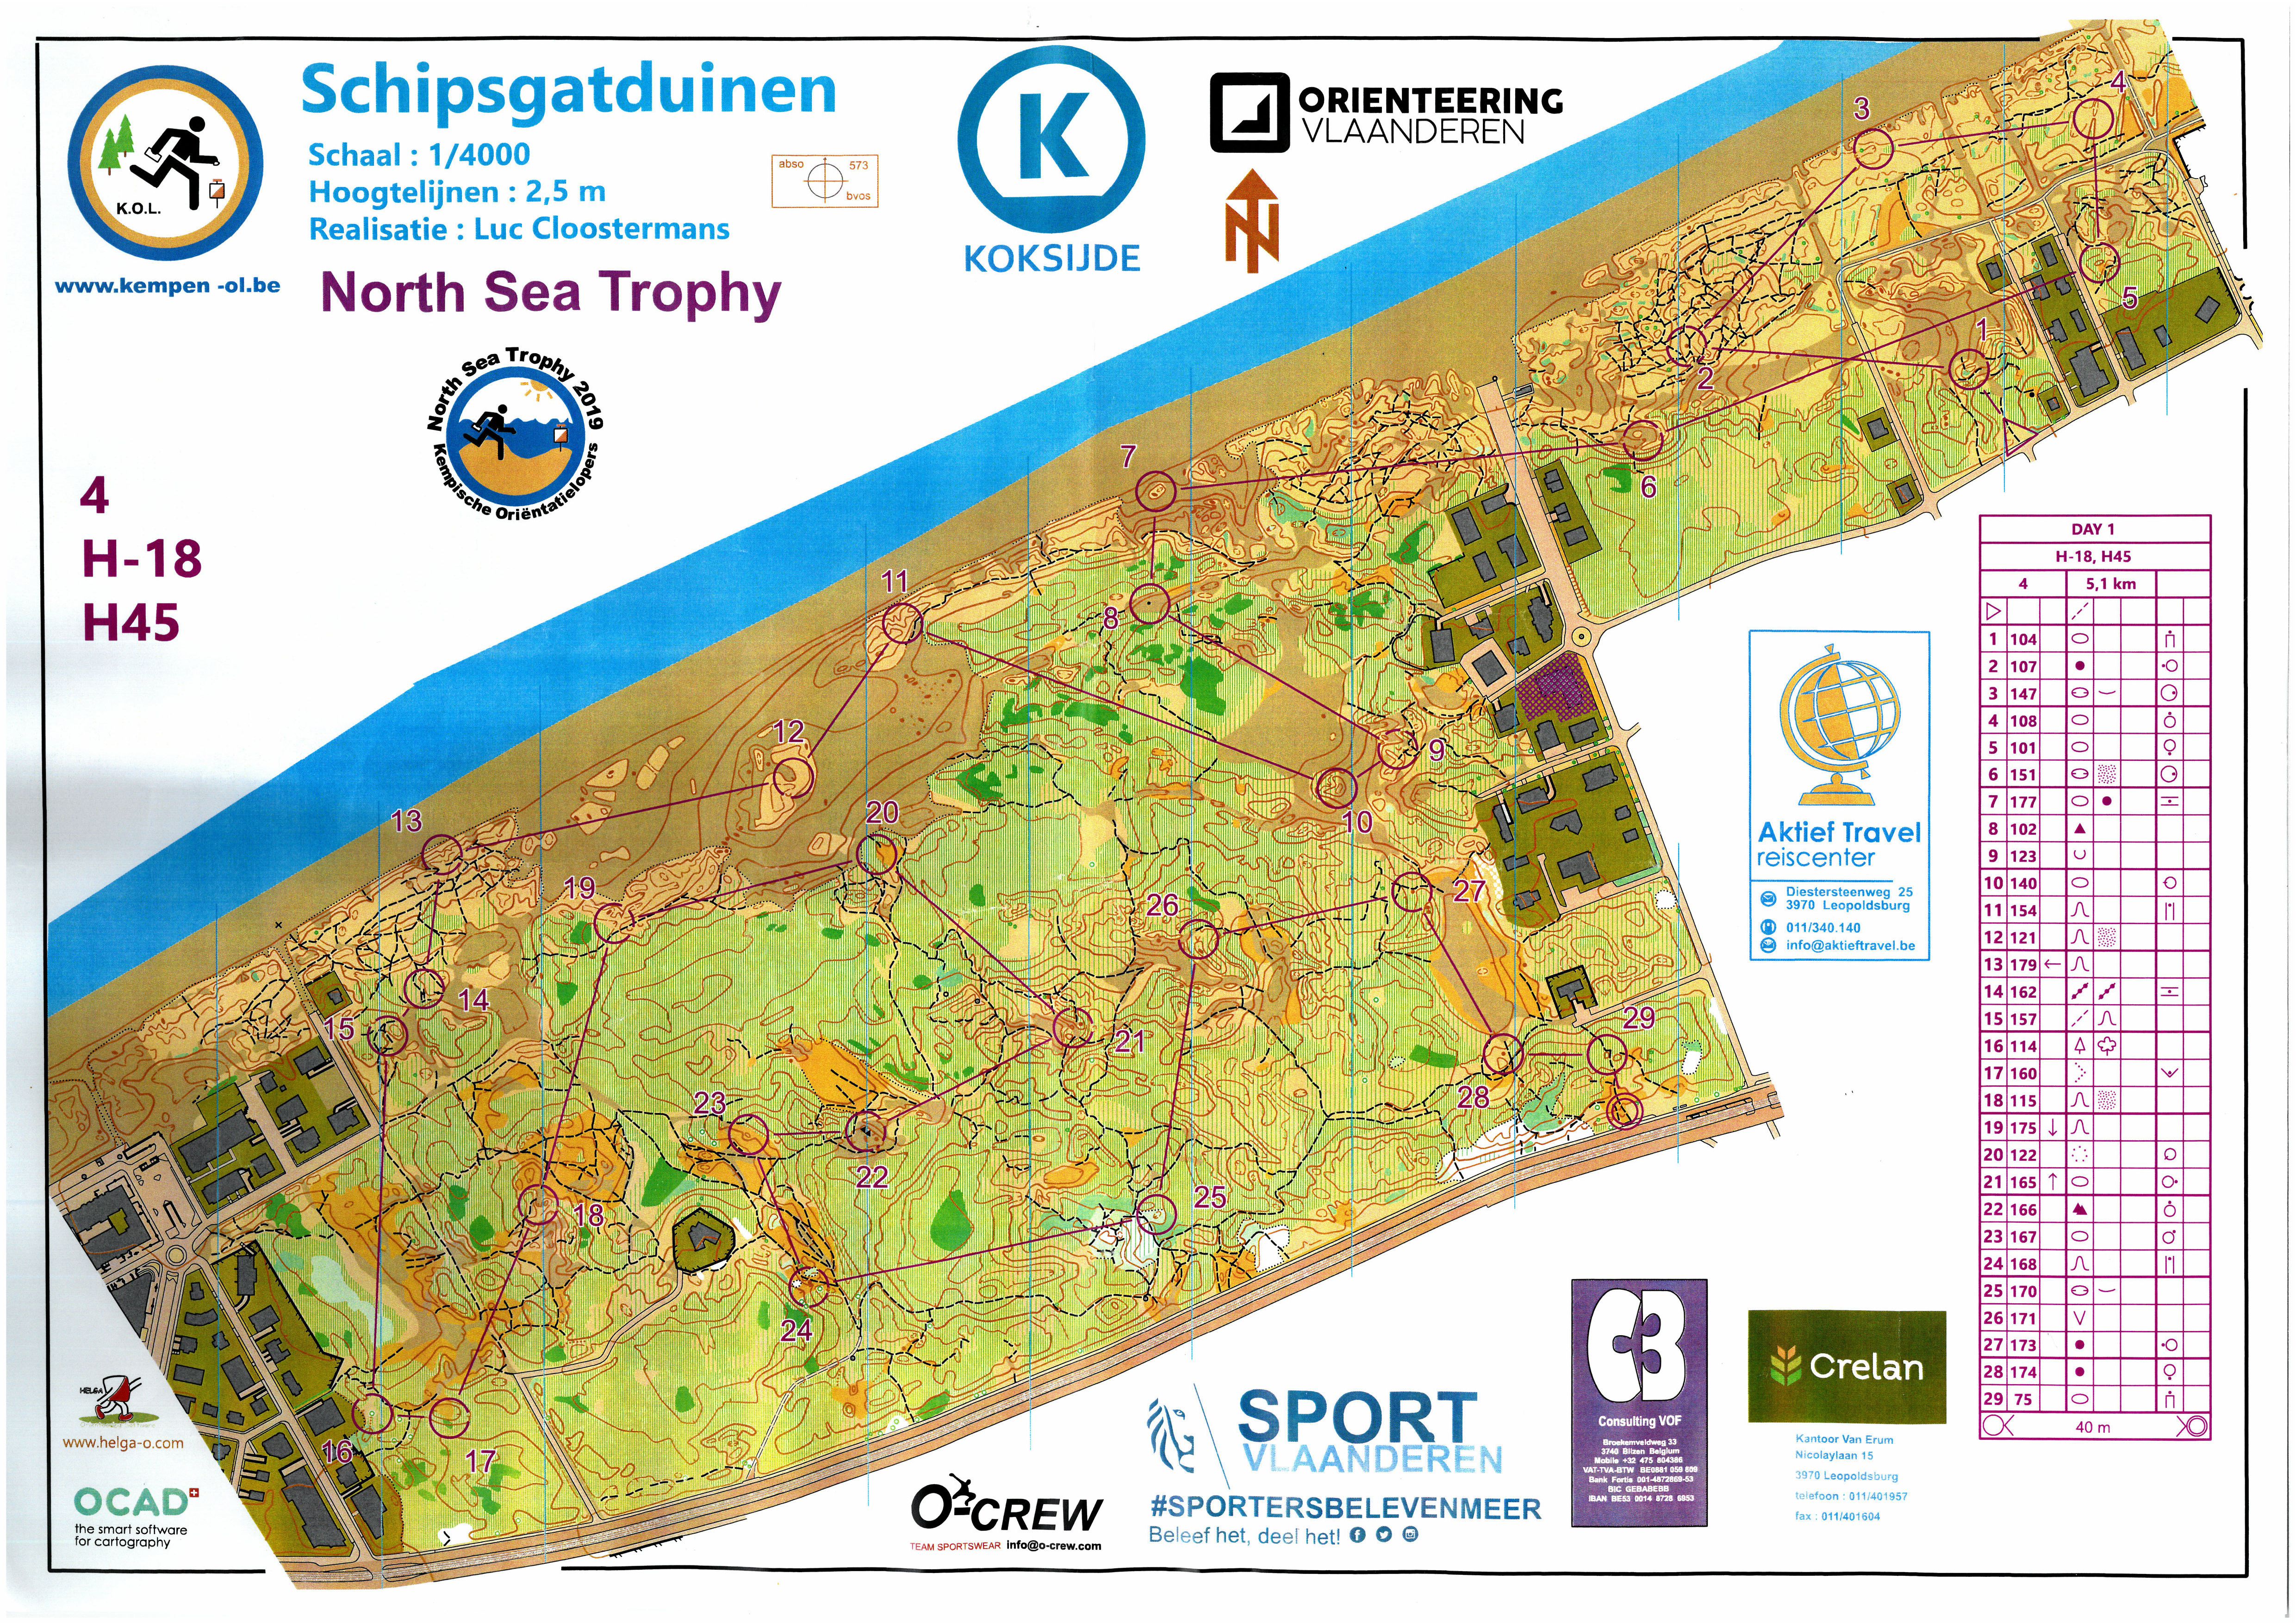 North Sea Trophy - Day1 - H45 (09-11-2019)